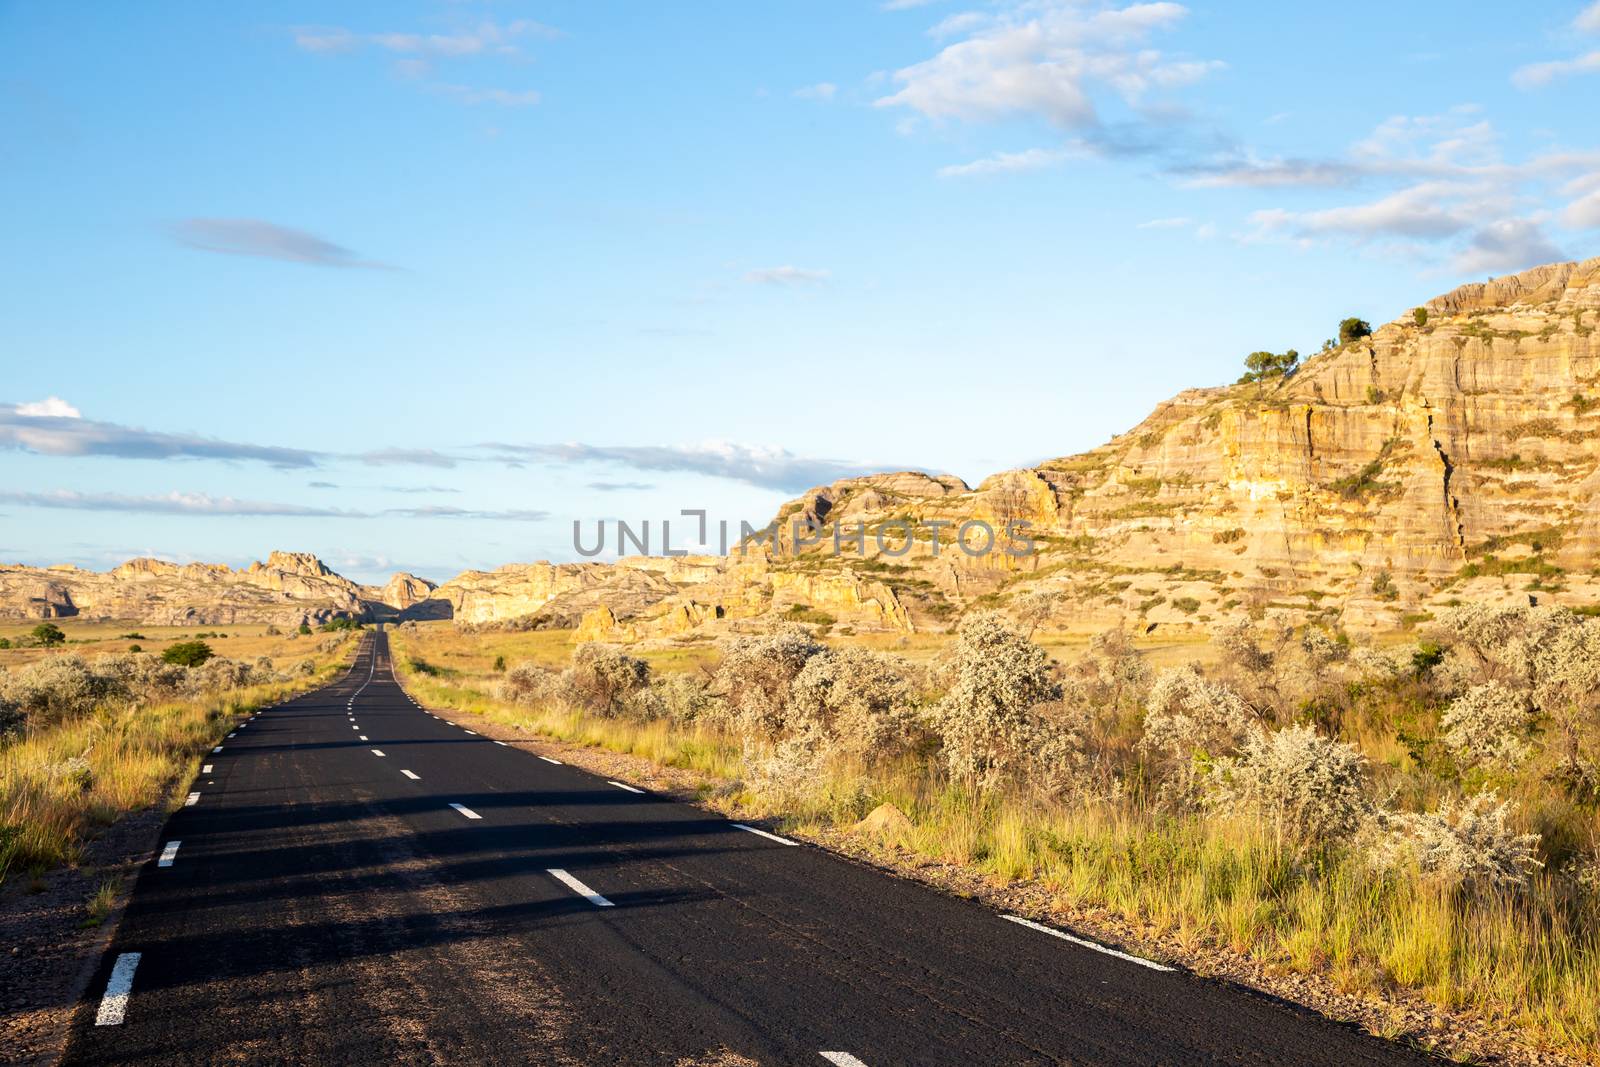 The asphalt road through the landscape of the island of Madagascar